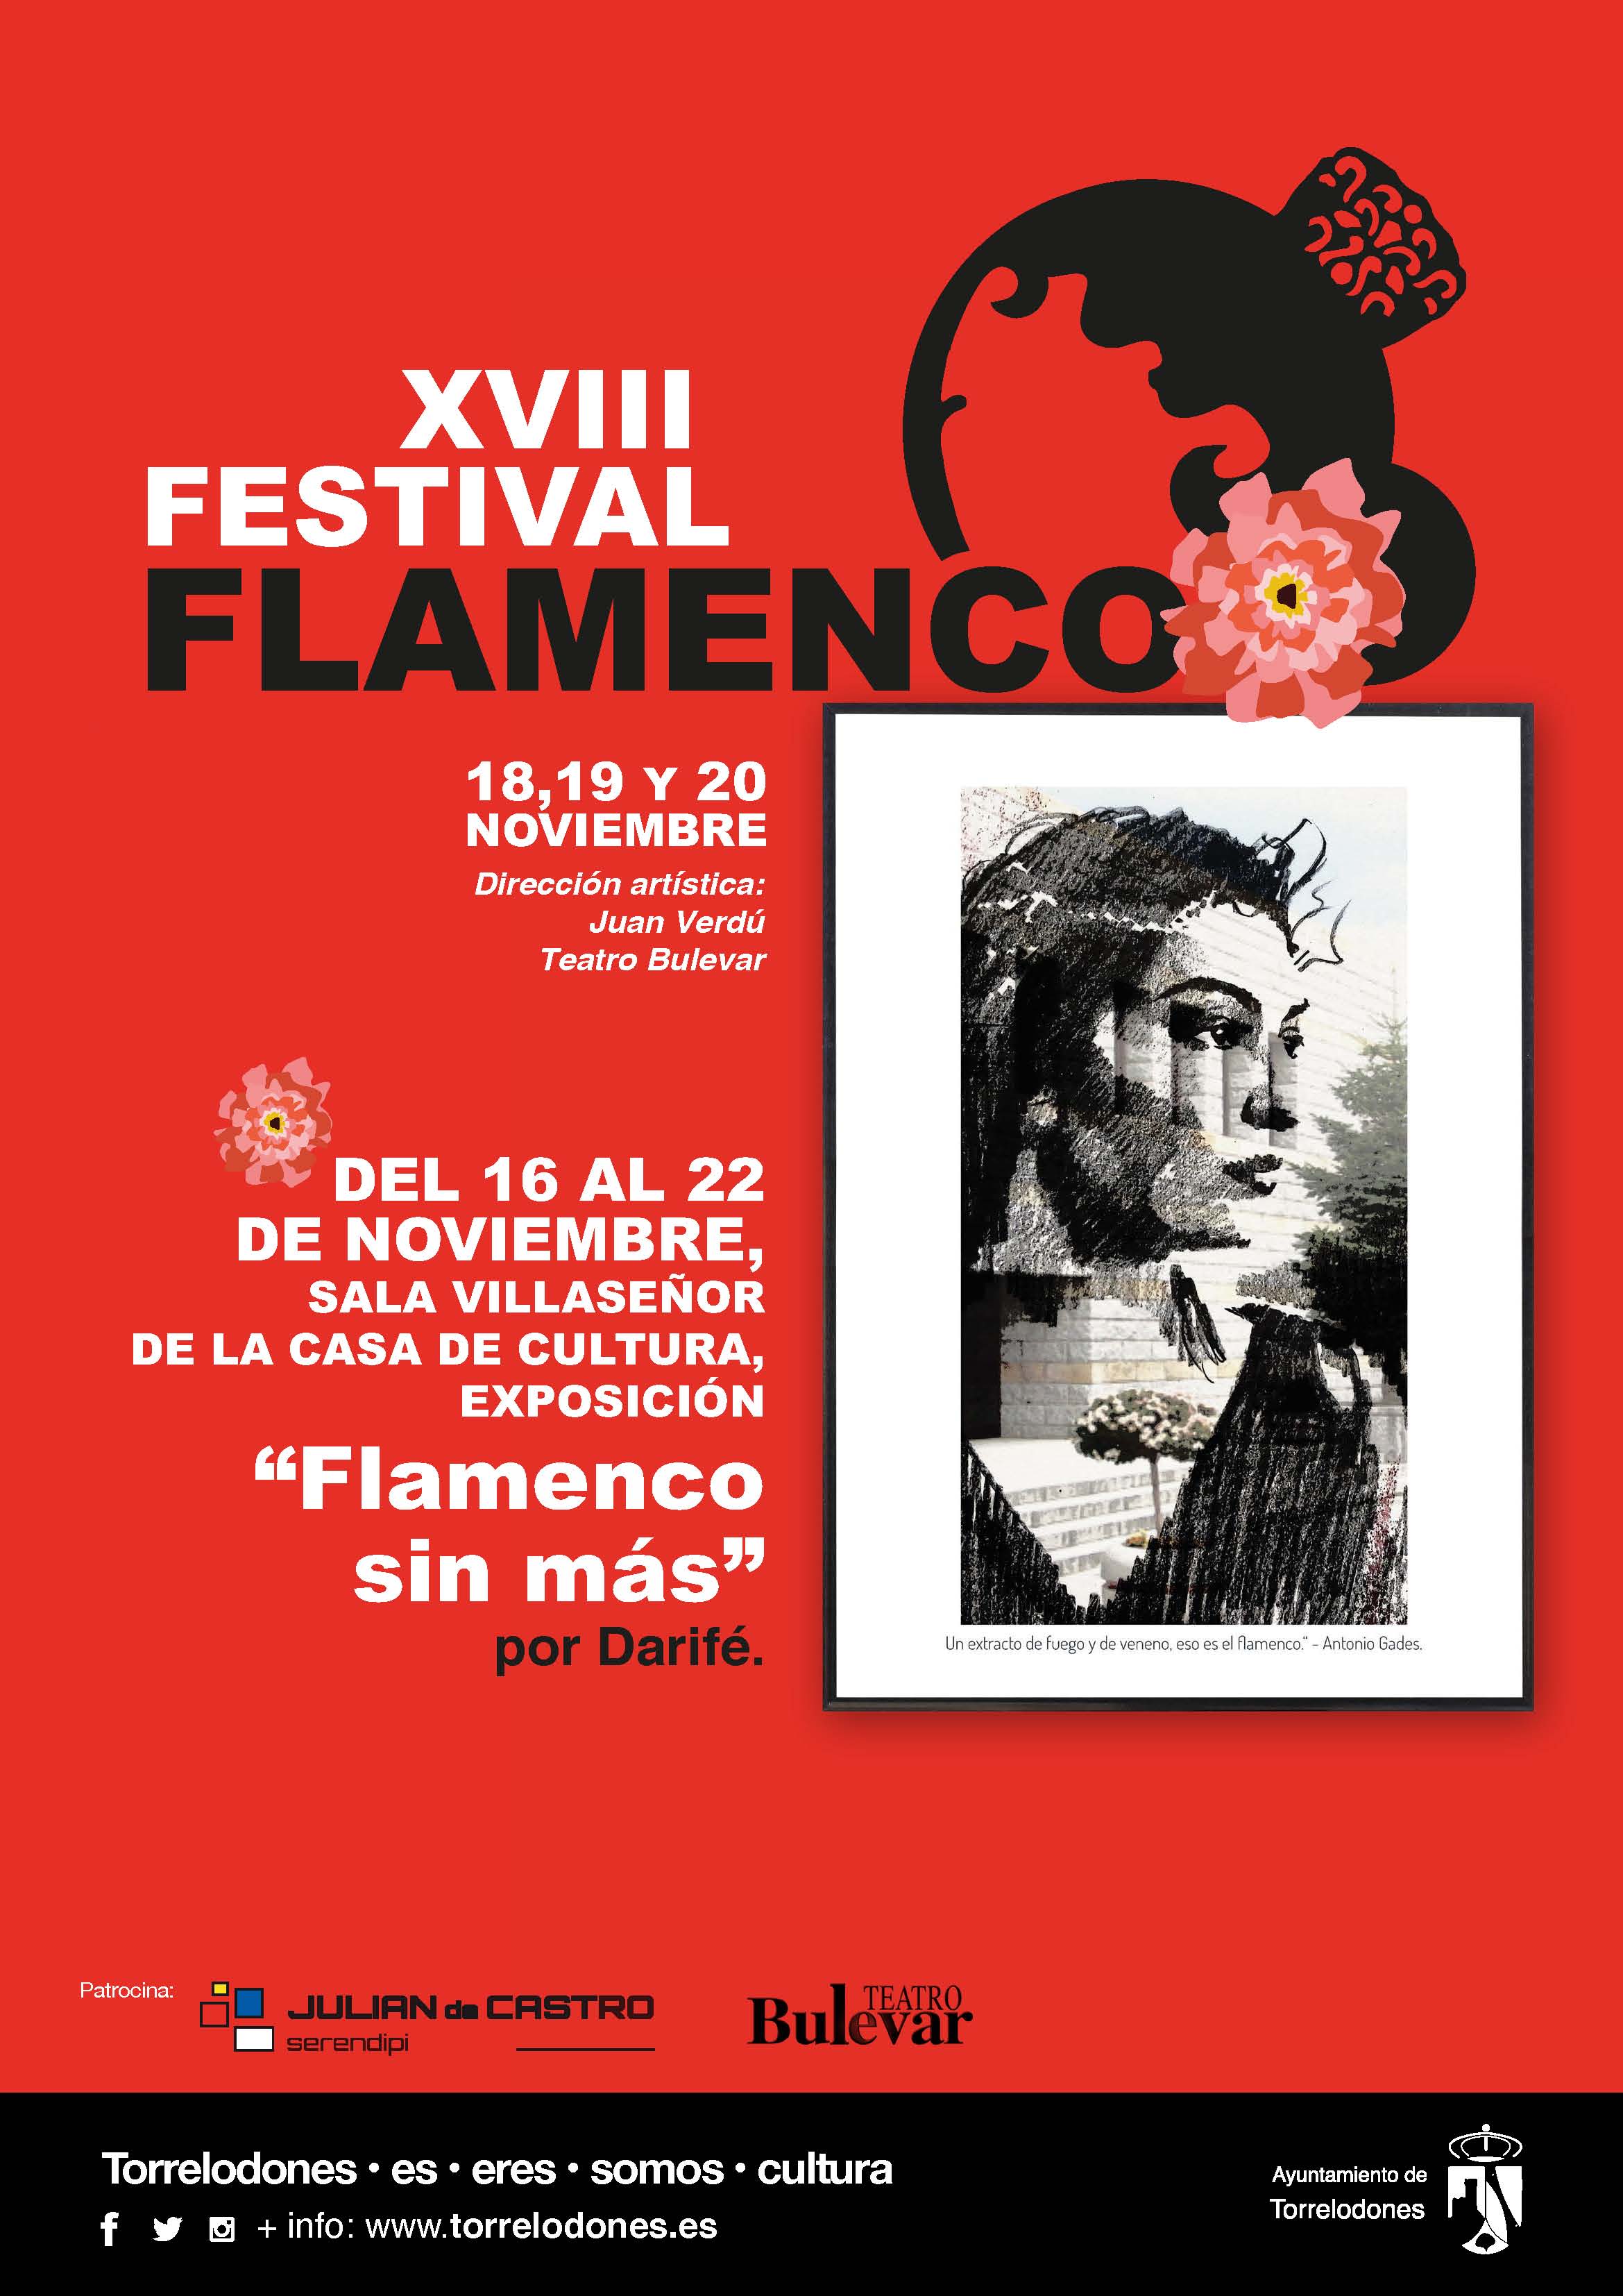 a3 xviii festival flamenco expo darife 14 10 2111